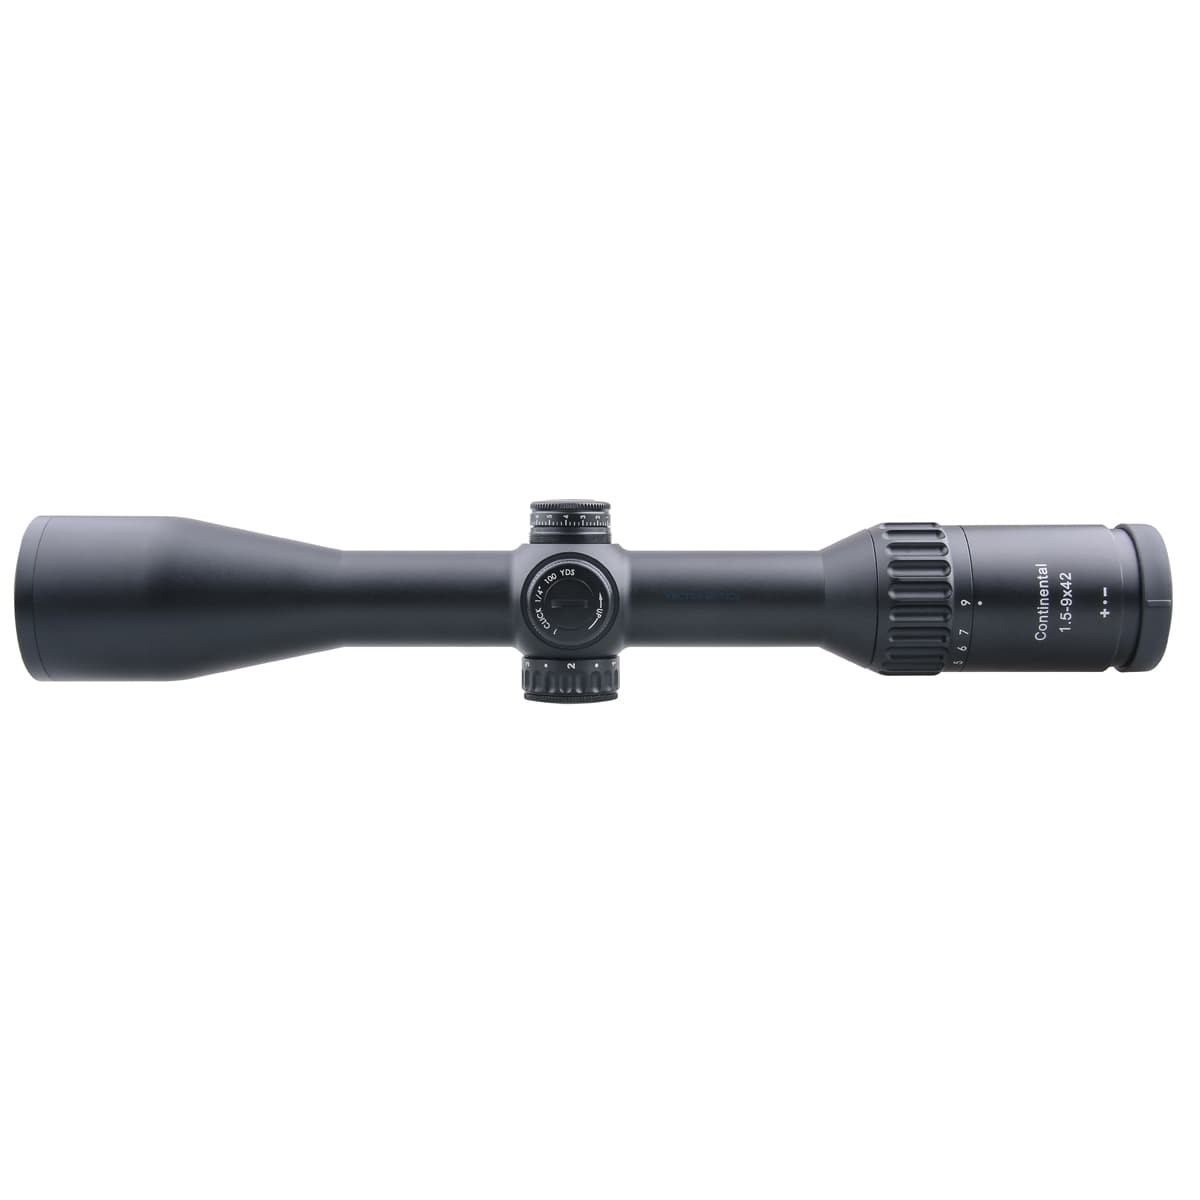 Continental 1.5-9x42 Riflescope